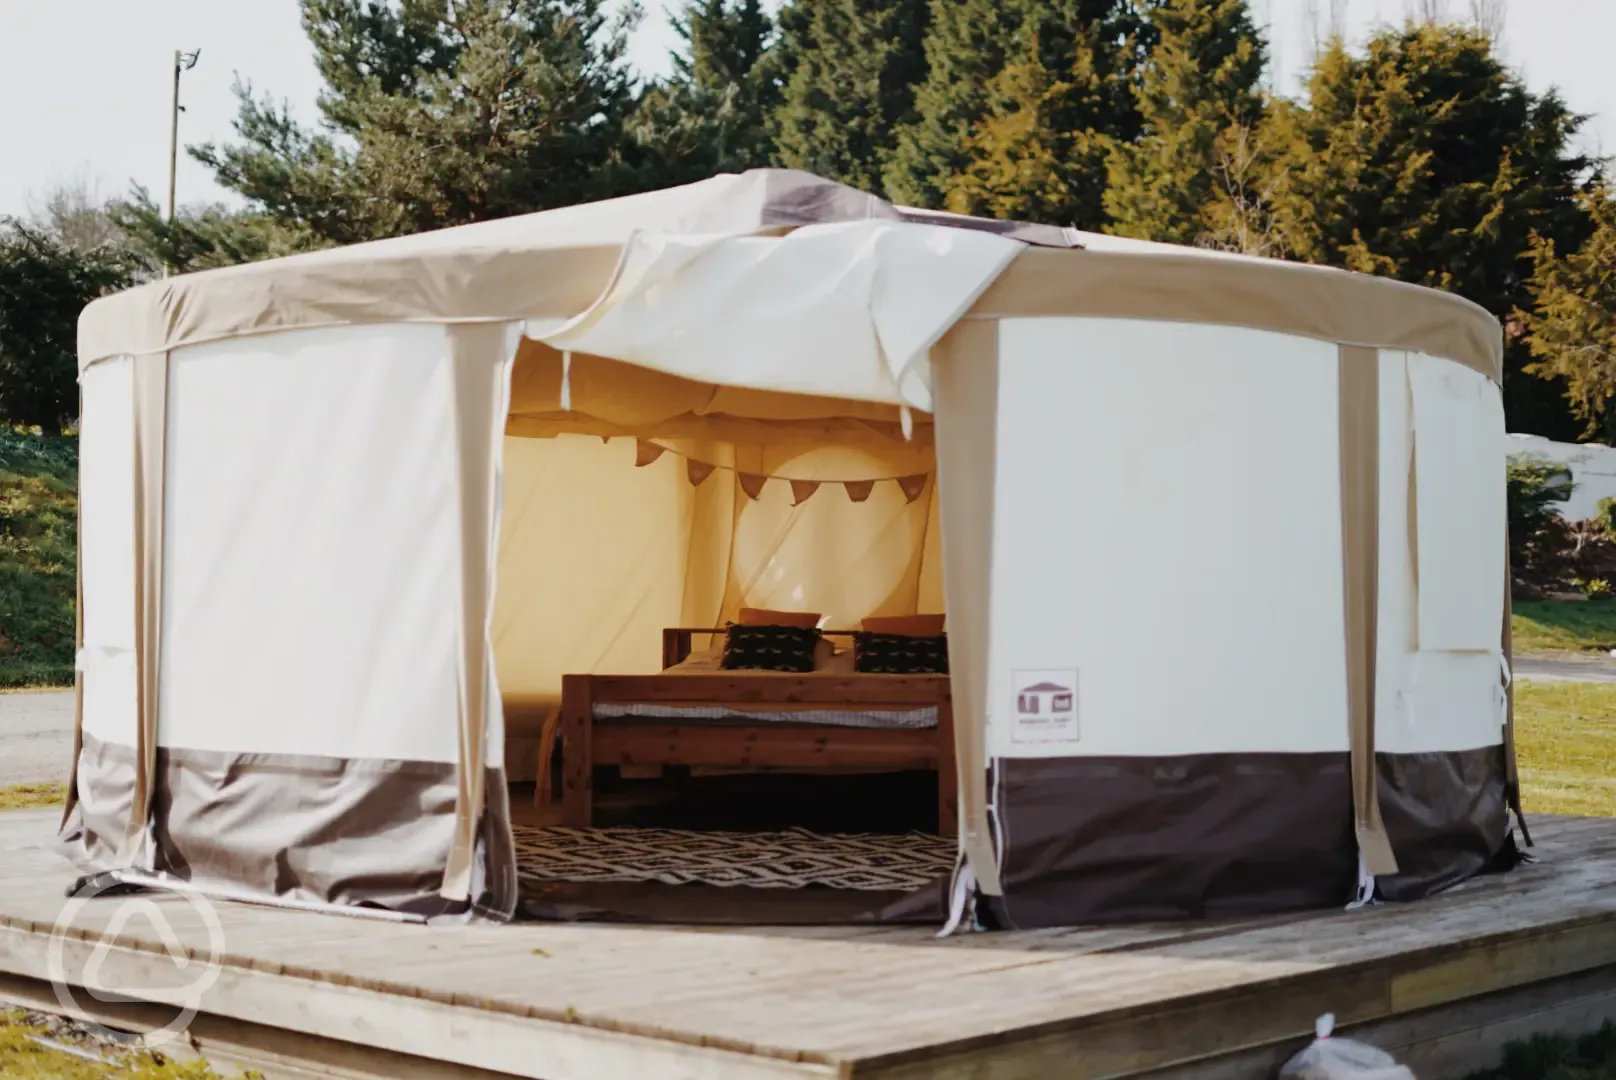 Hopley's Yurt Interior